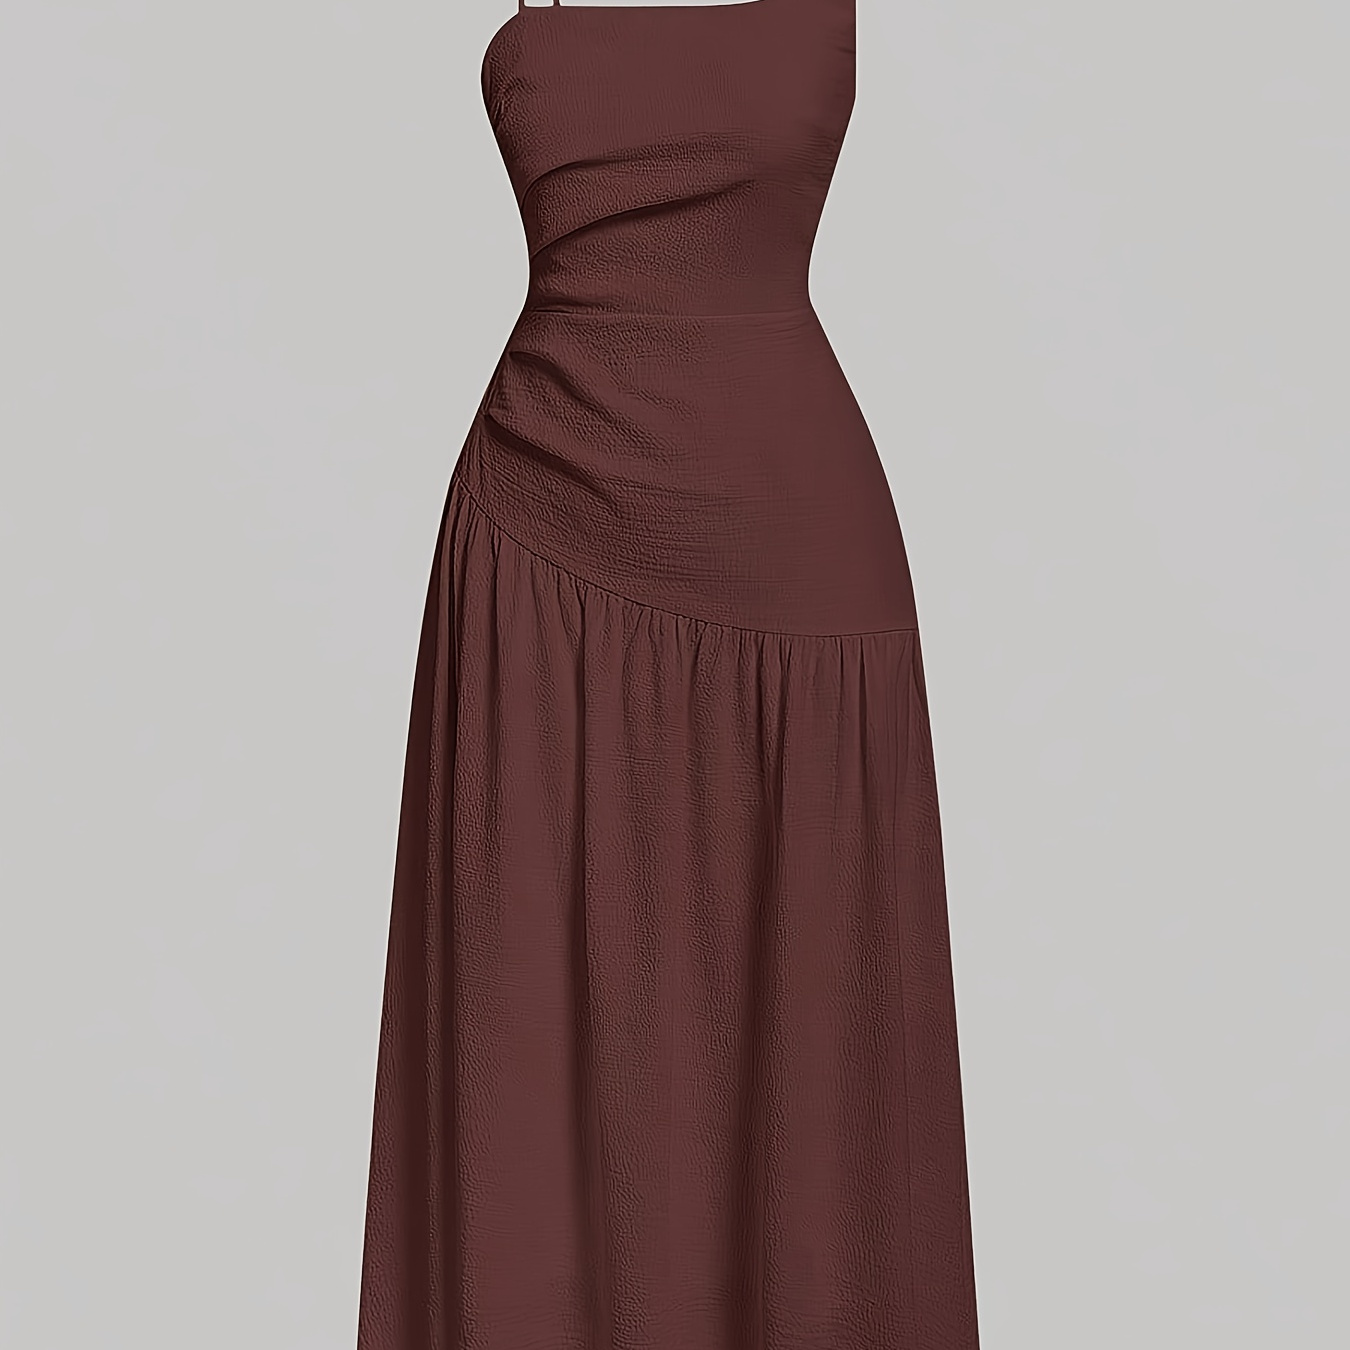 

Asymmetrical Neck Solid Color Dress, Elegant Sleeveless Dress For Summer, Women's Clothing